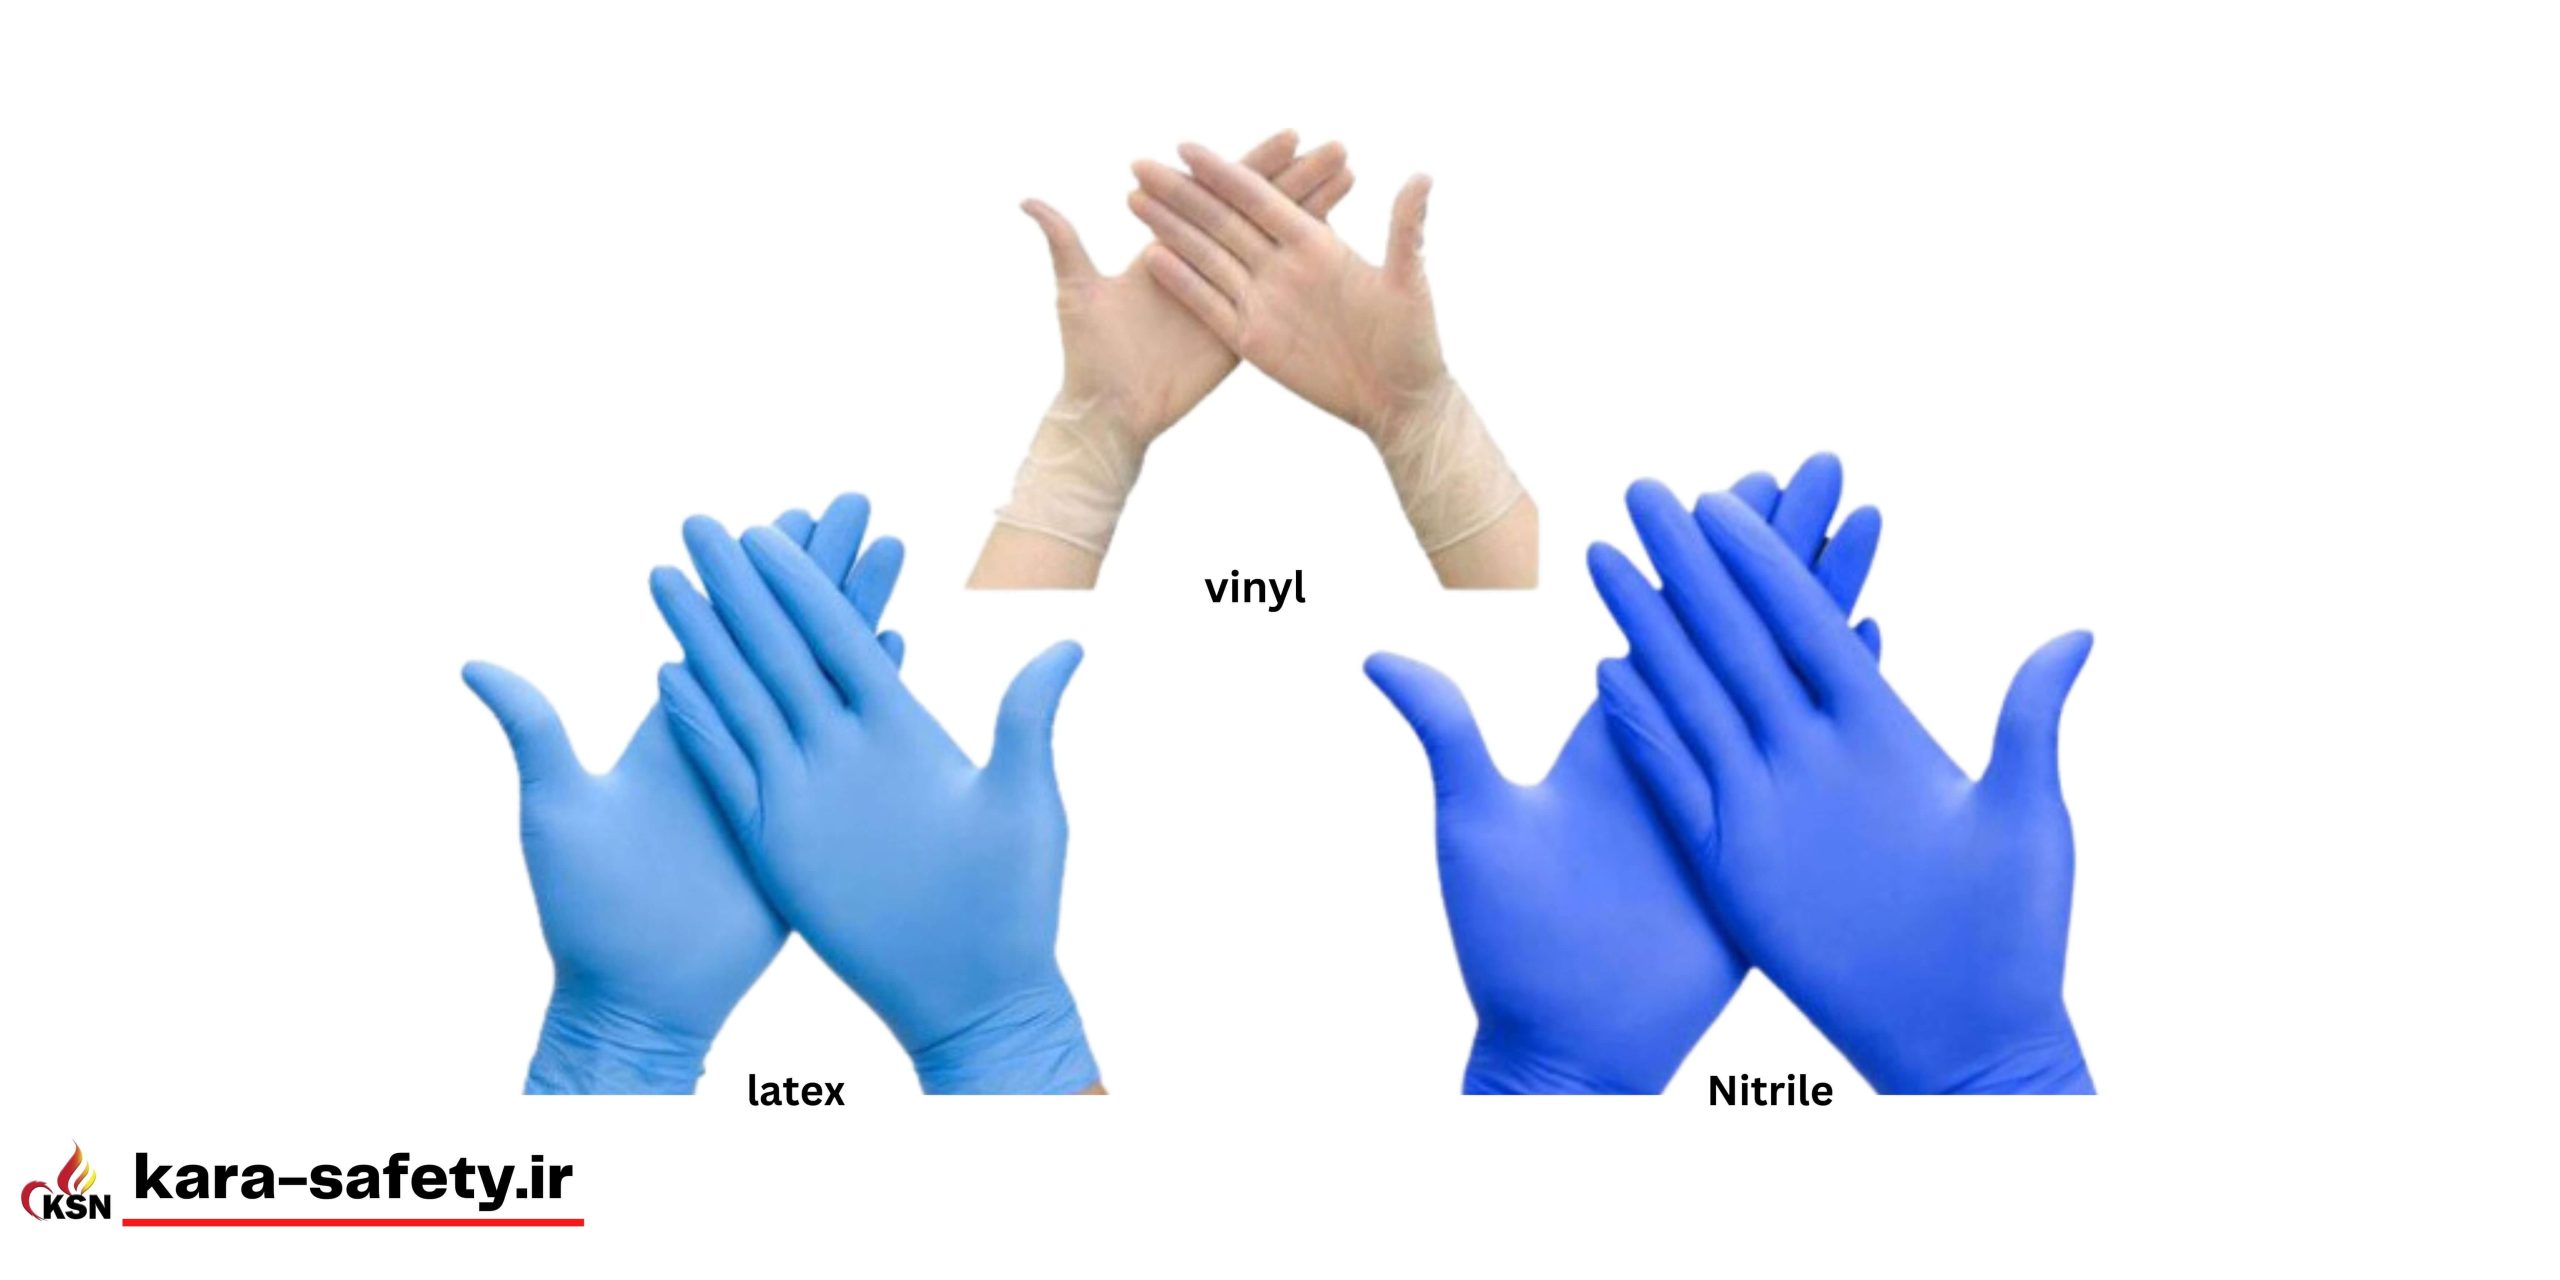 تفاوت دستکش نیتریل، وینیل و لاتکس